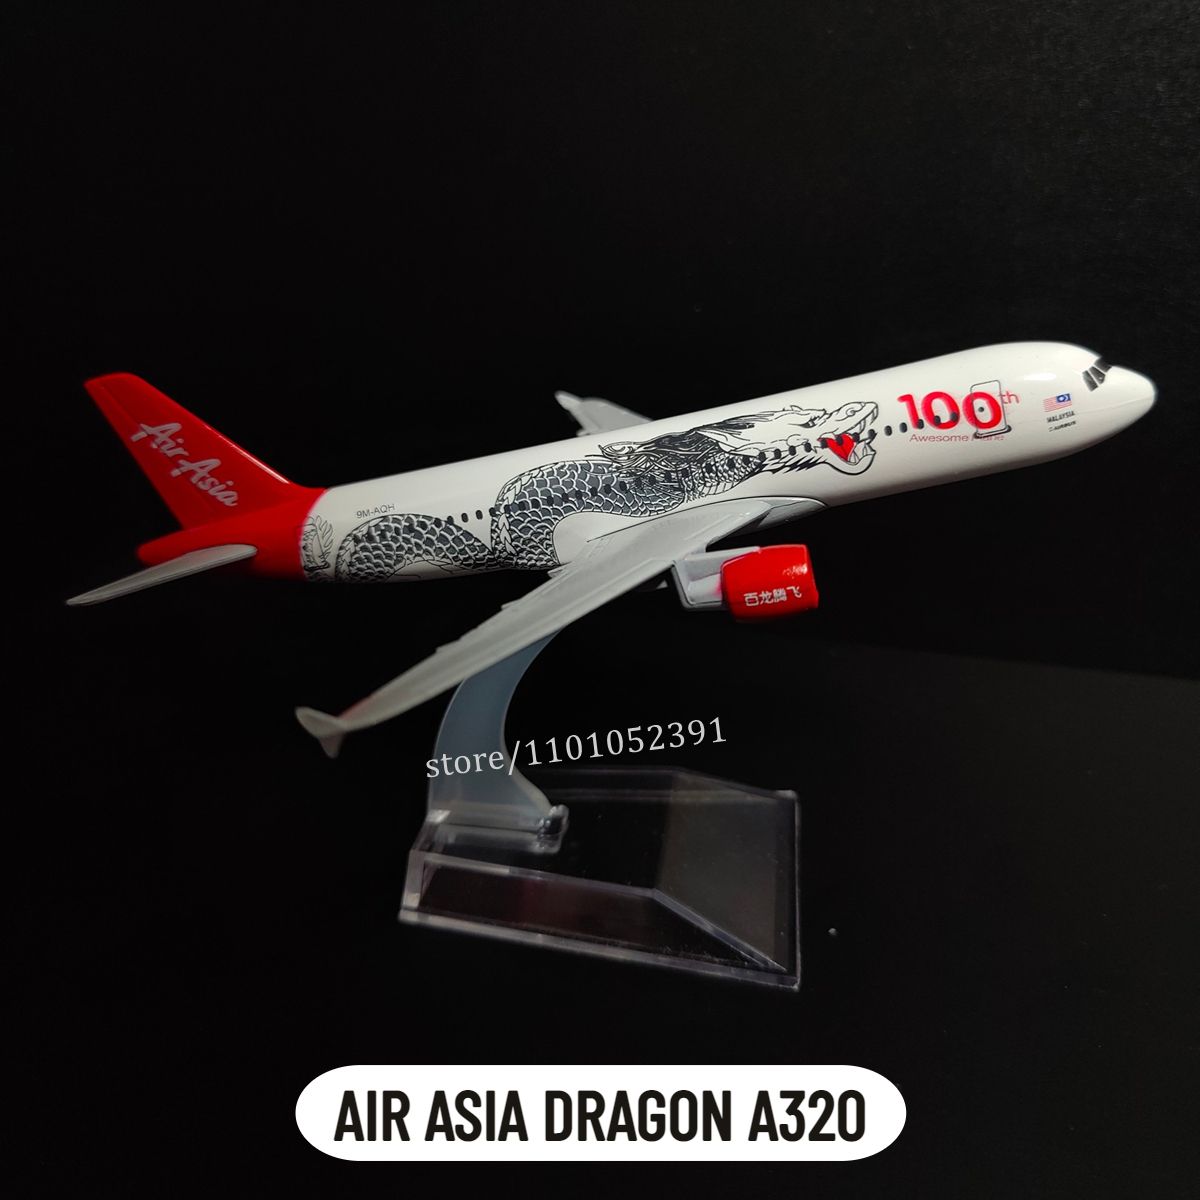 50.Asia Dragon A320